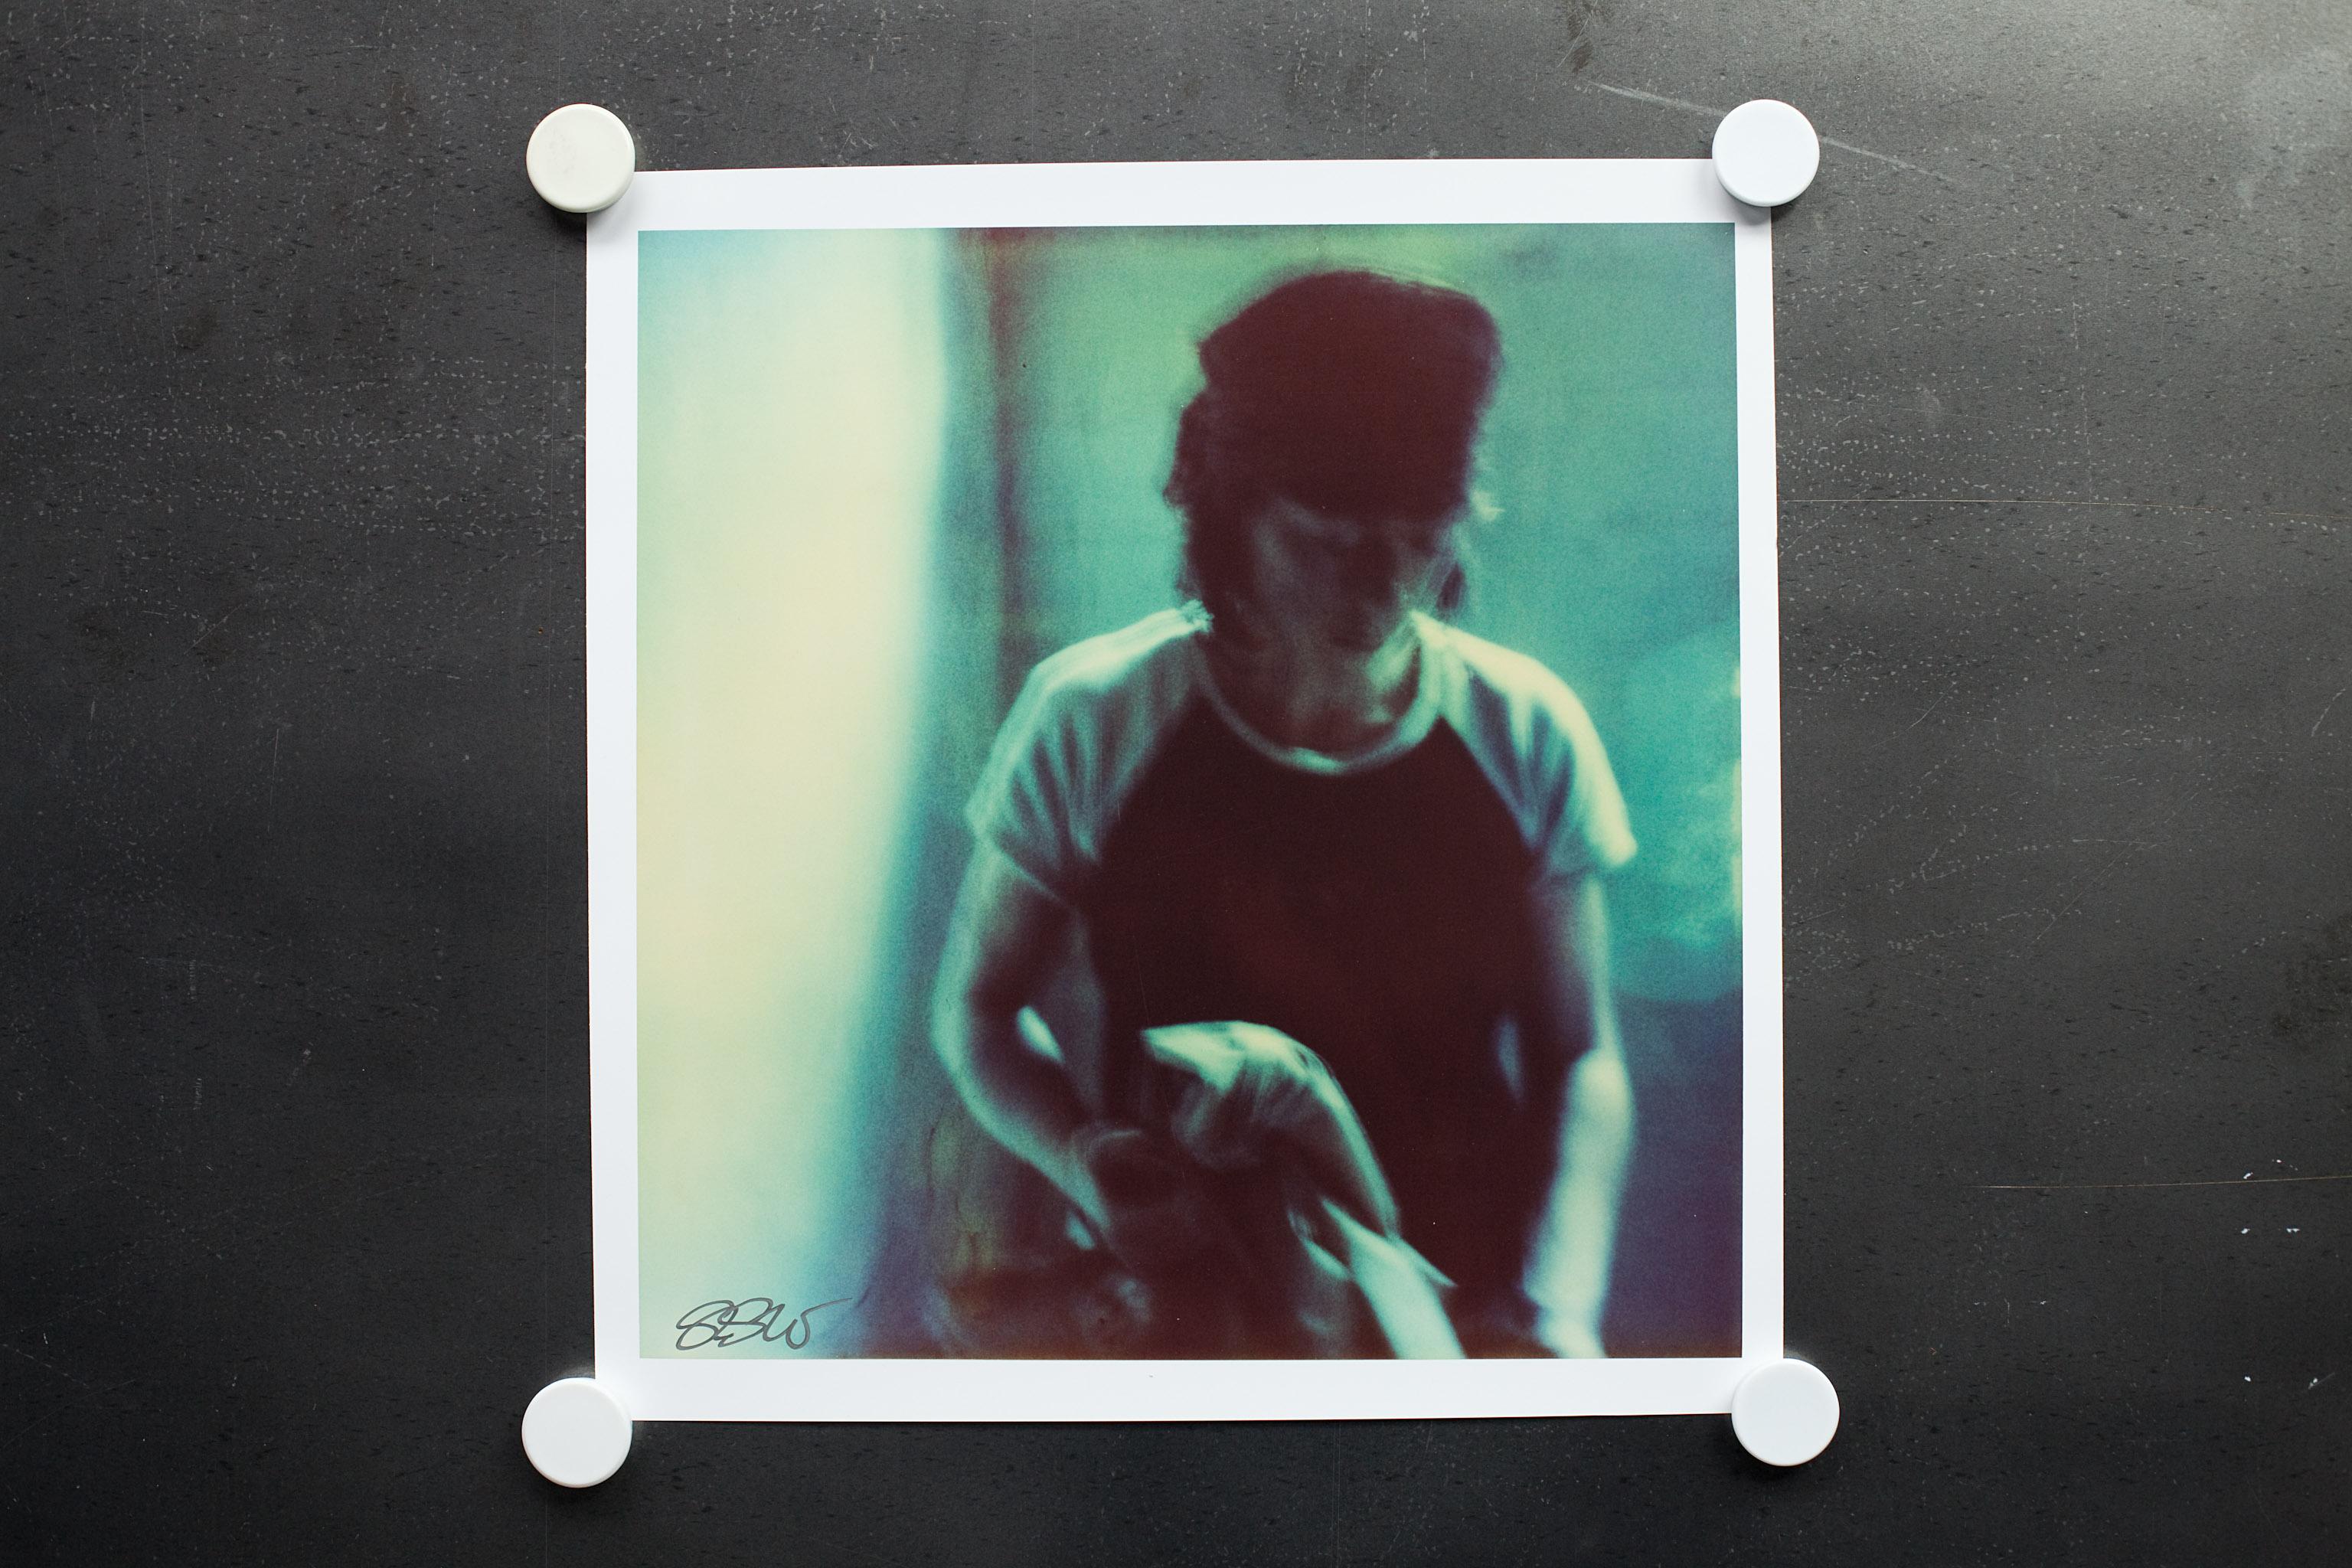 Stefanie Schneider Portrait Photograph - Max Blue (The last Picture Show) -  based on a Polaroid Original - Proof